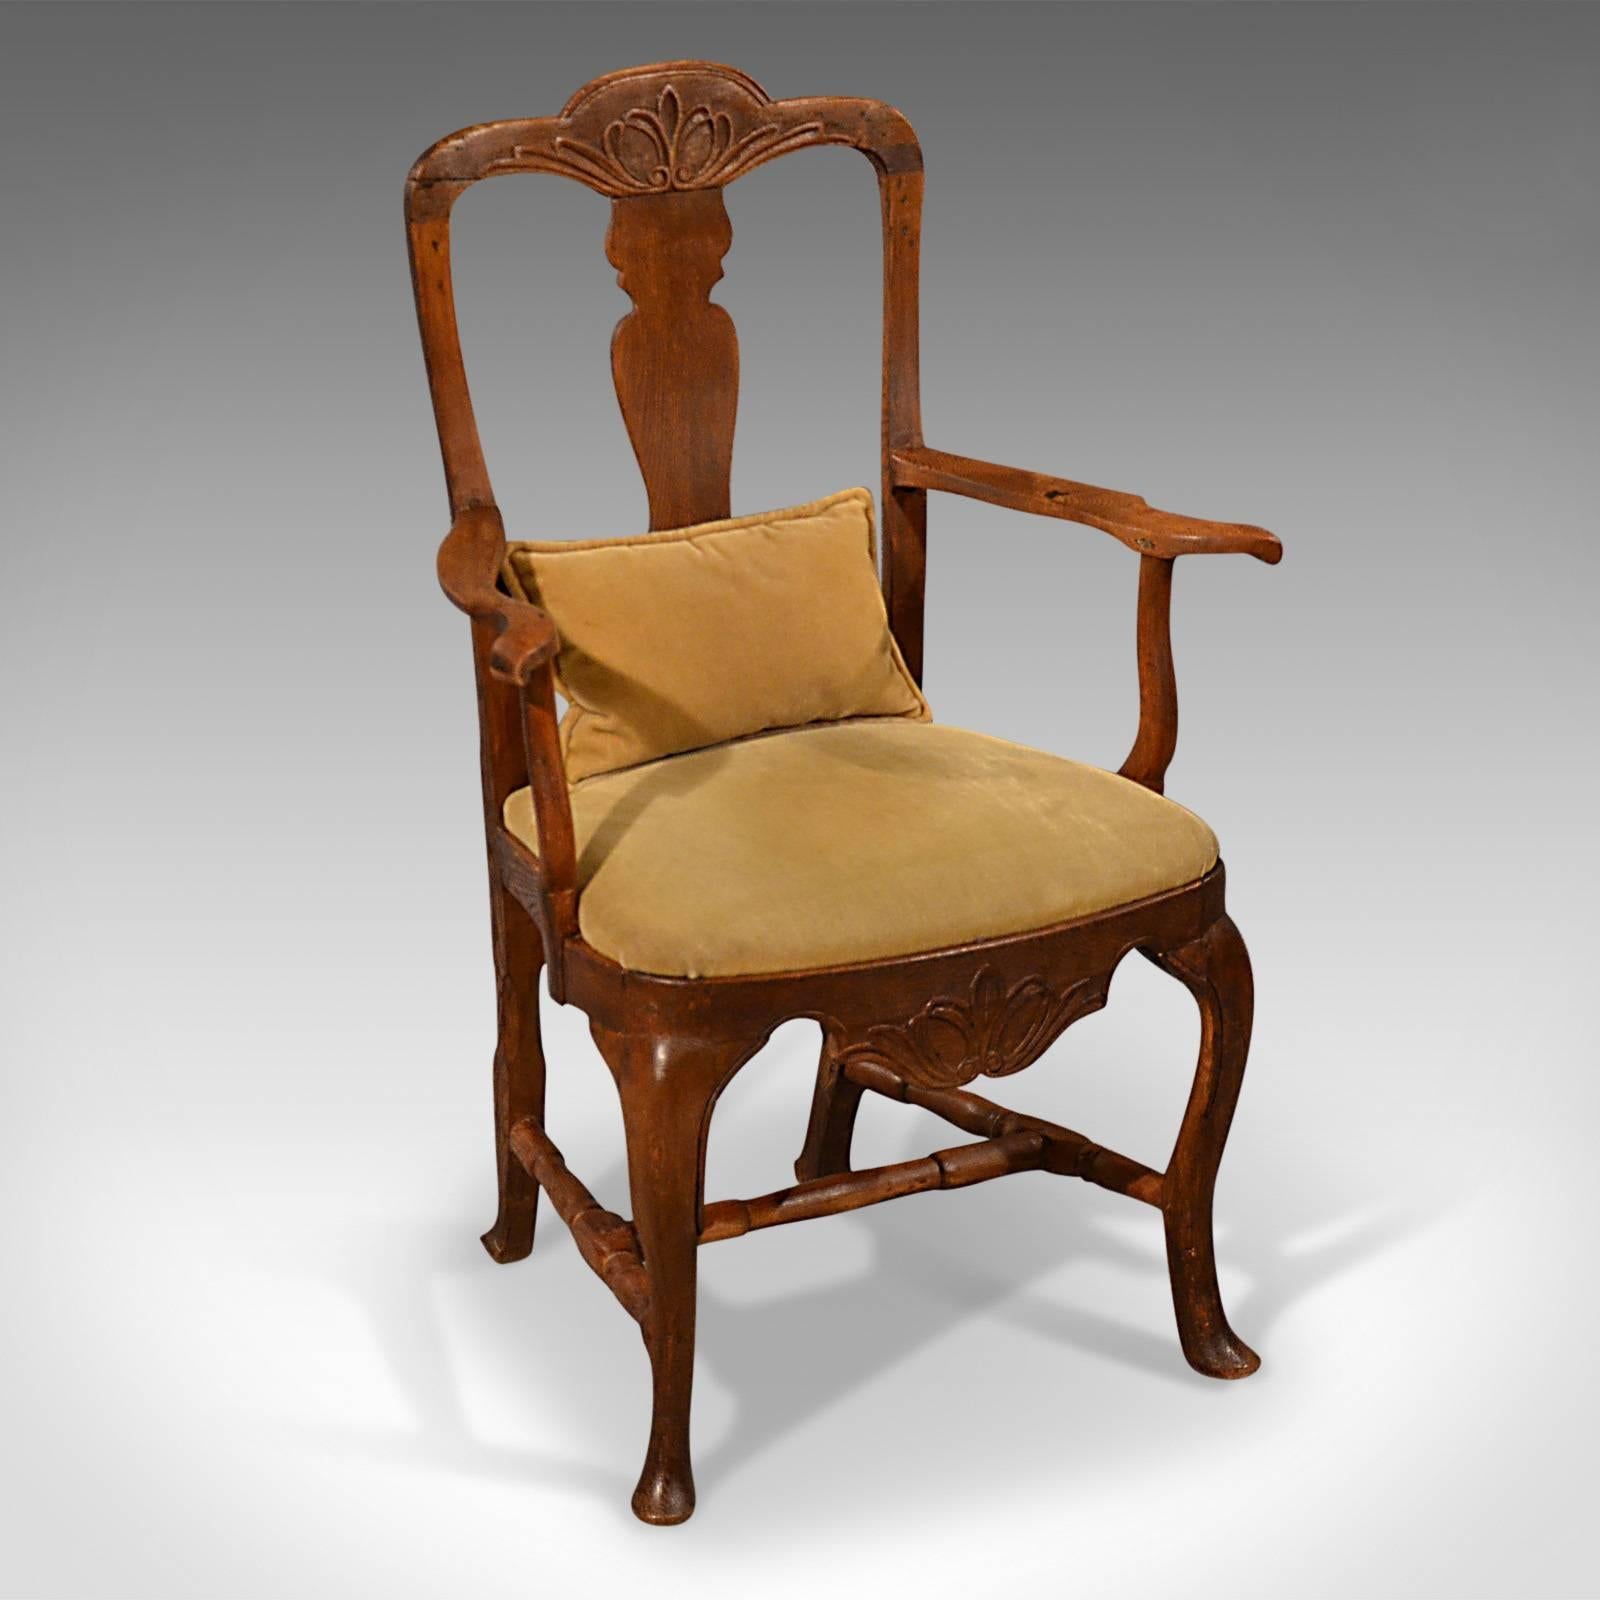 Antique Elbow Chair Large Oak Ash Elm, Study Desk, Georgian Armchair, circa 1800 (19. Jahrhundert)